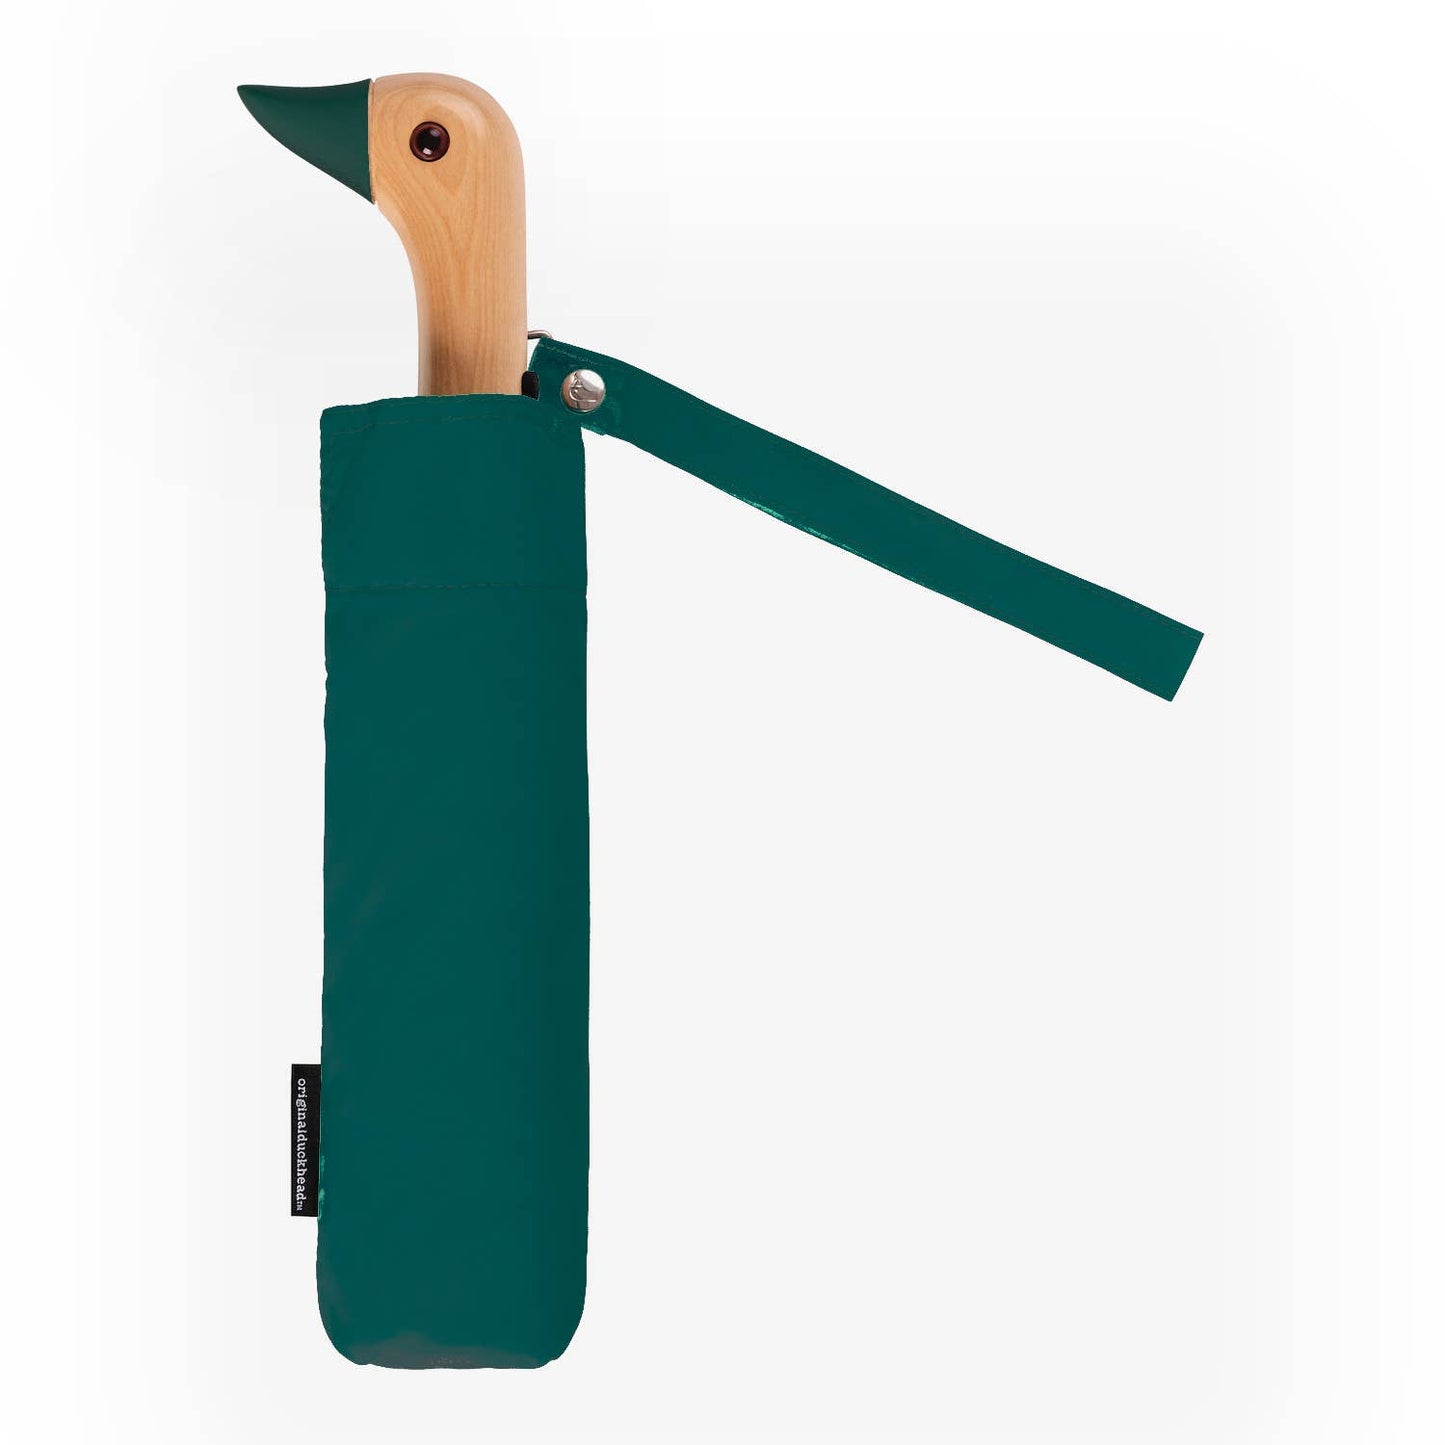 Original Duckhead Compact Eco-Friendly Wind Resistant Umbrella